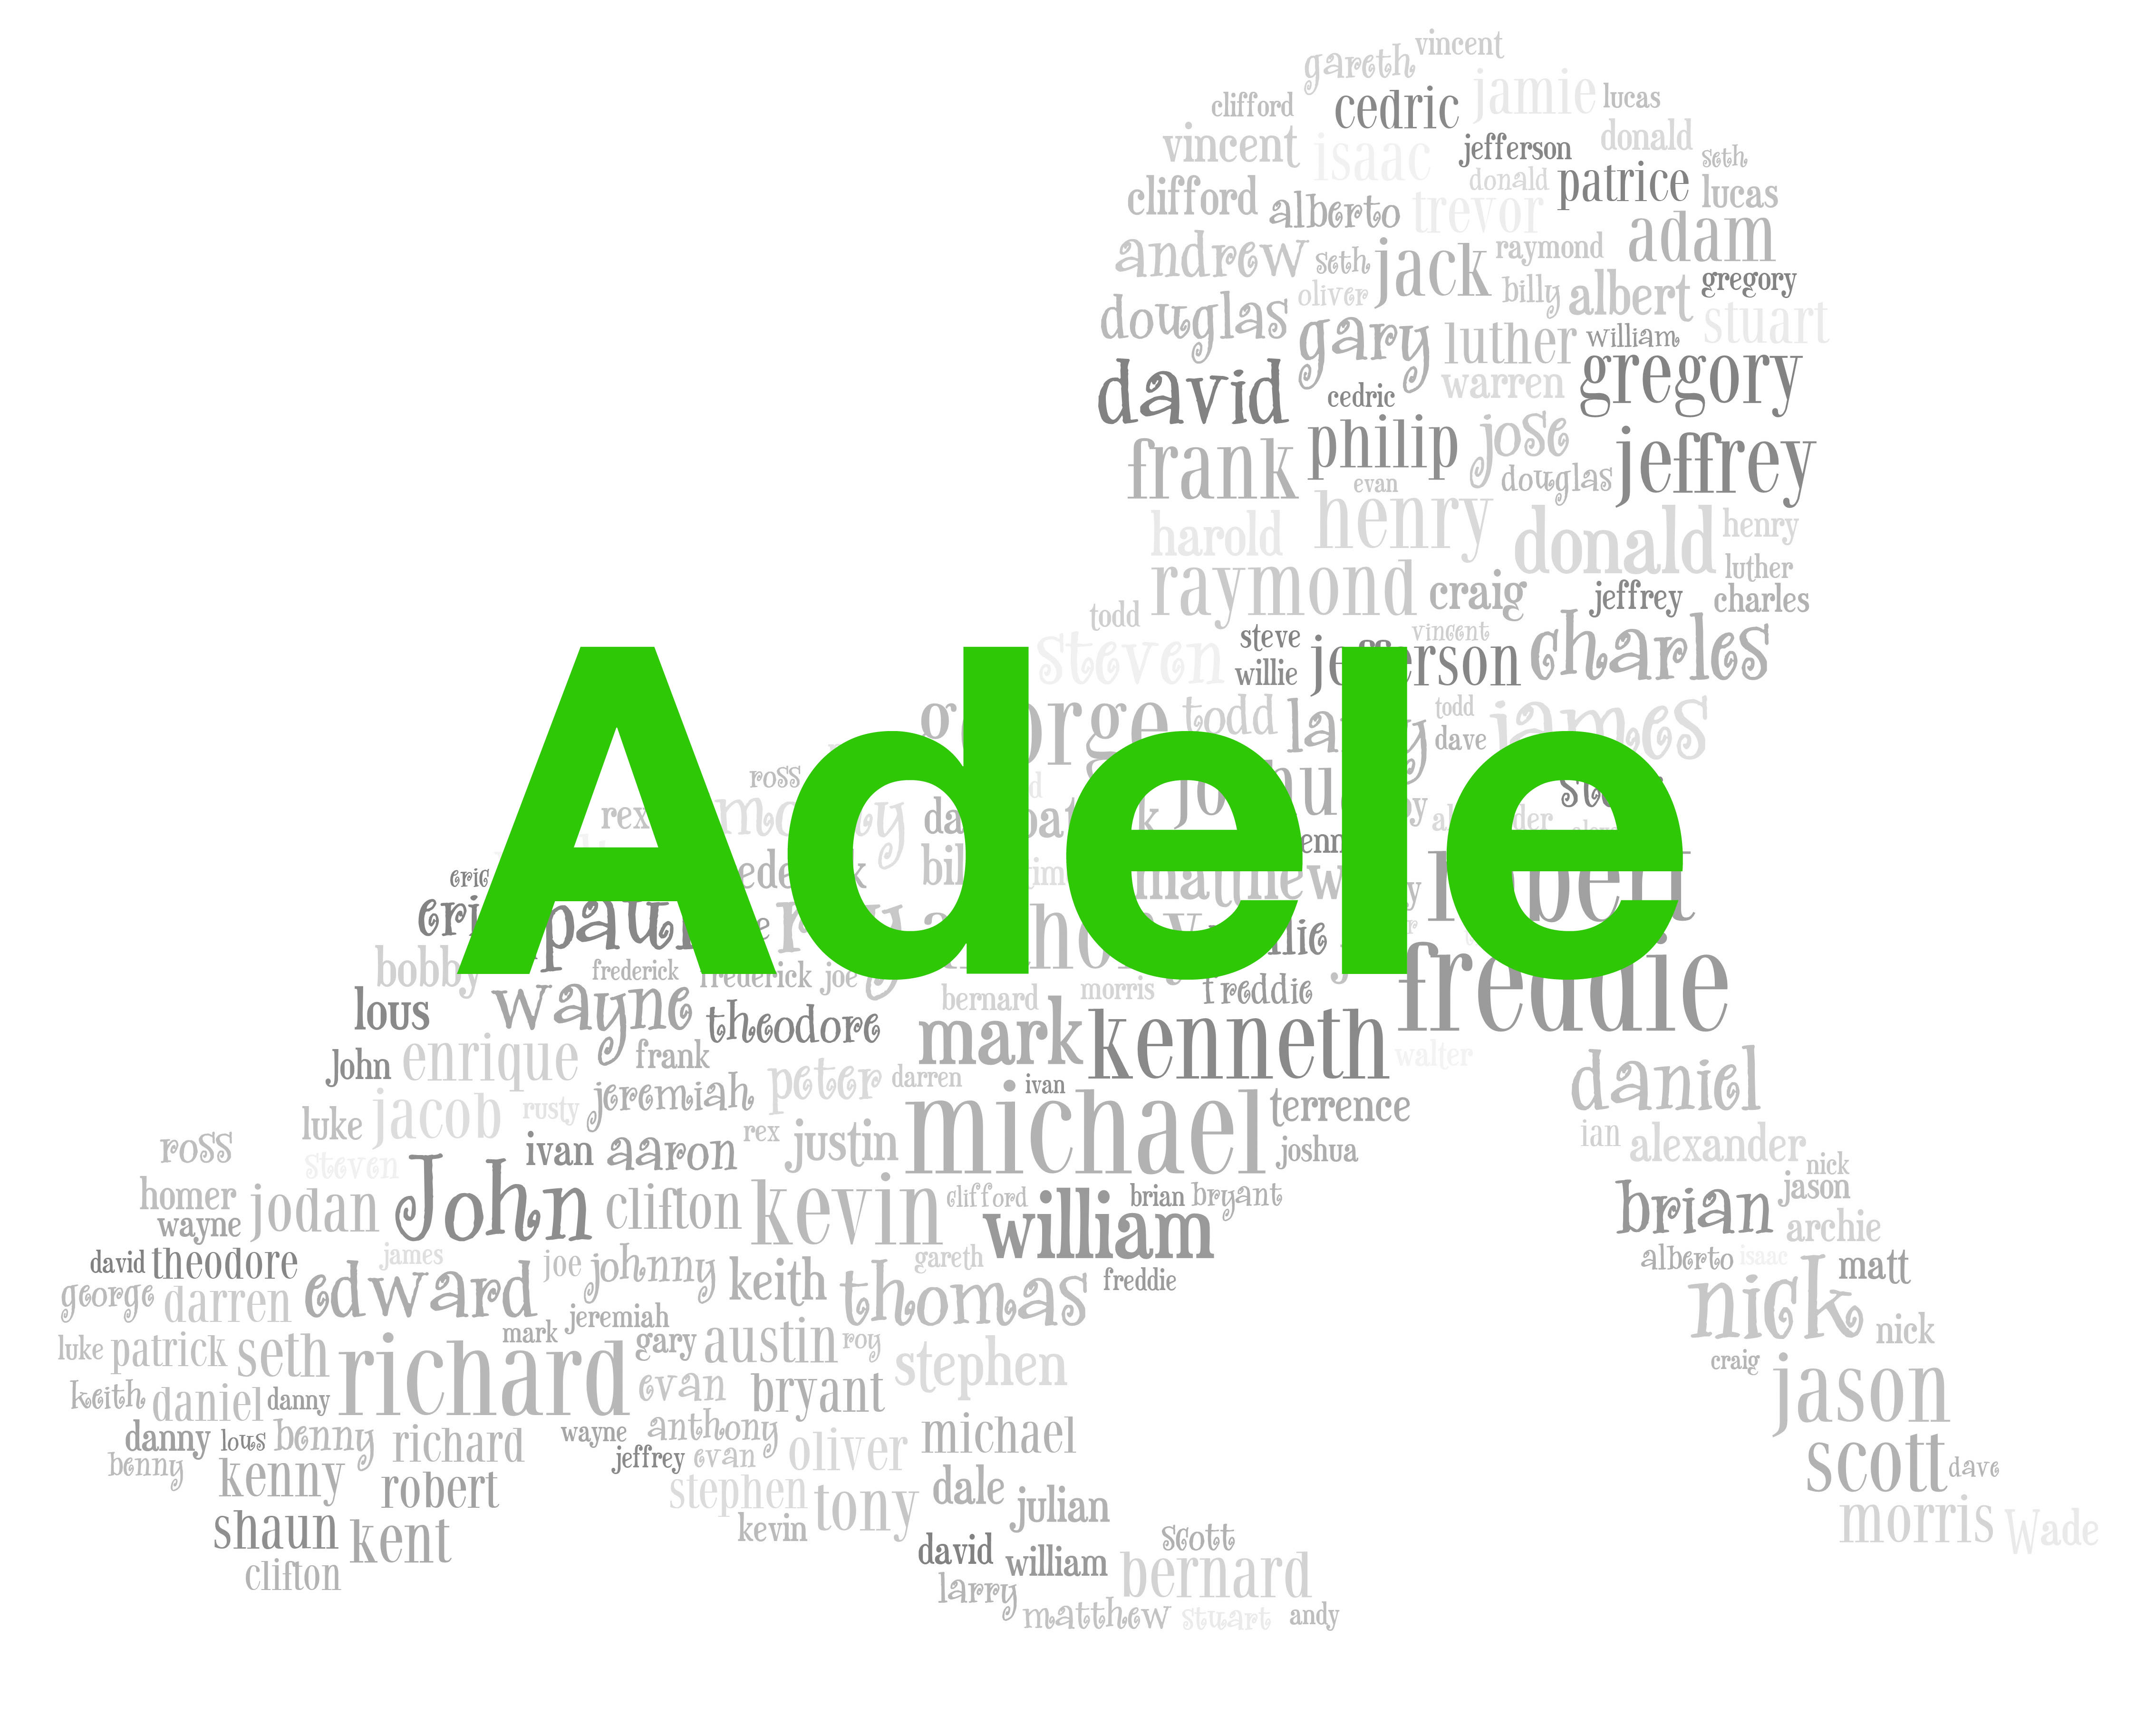 Girls: Adele